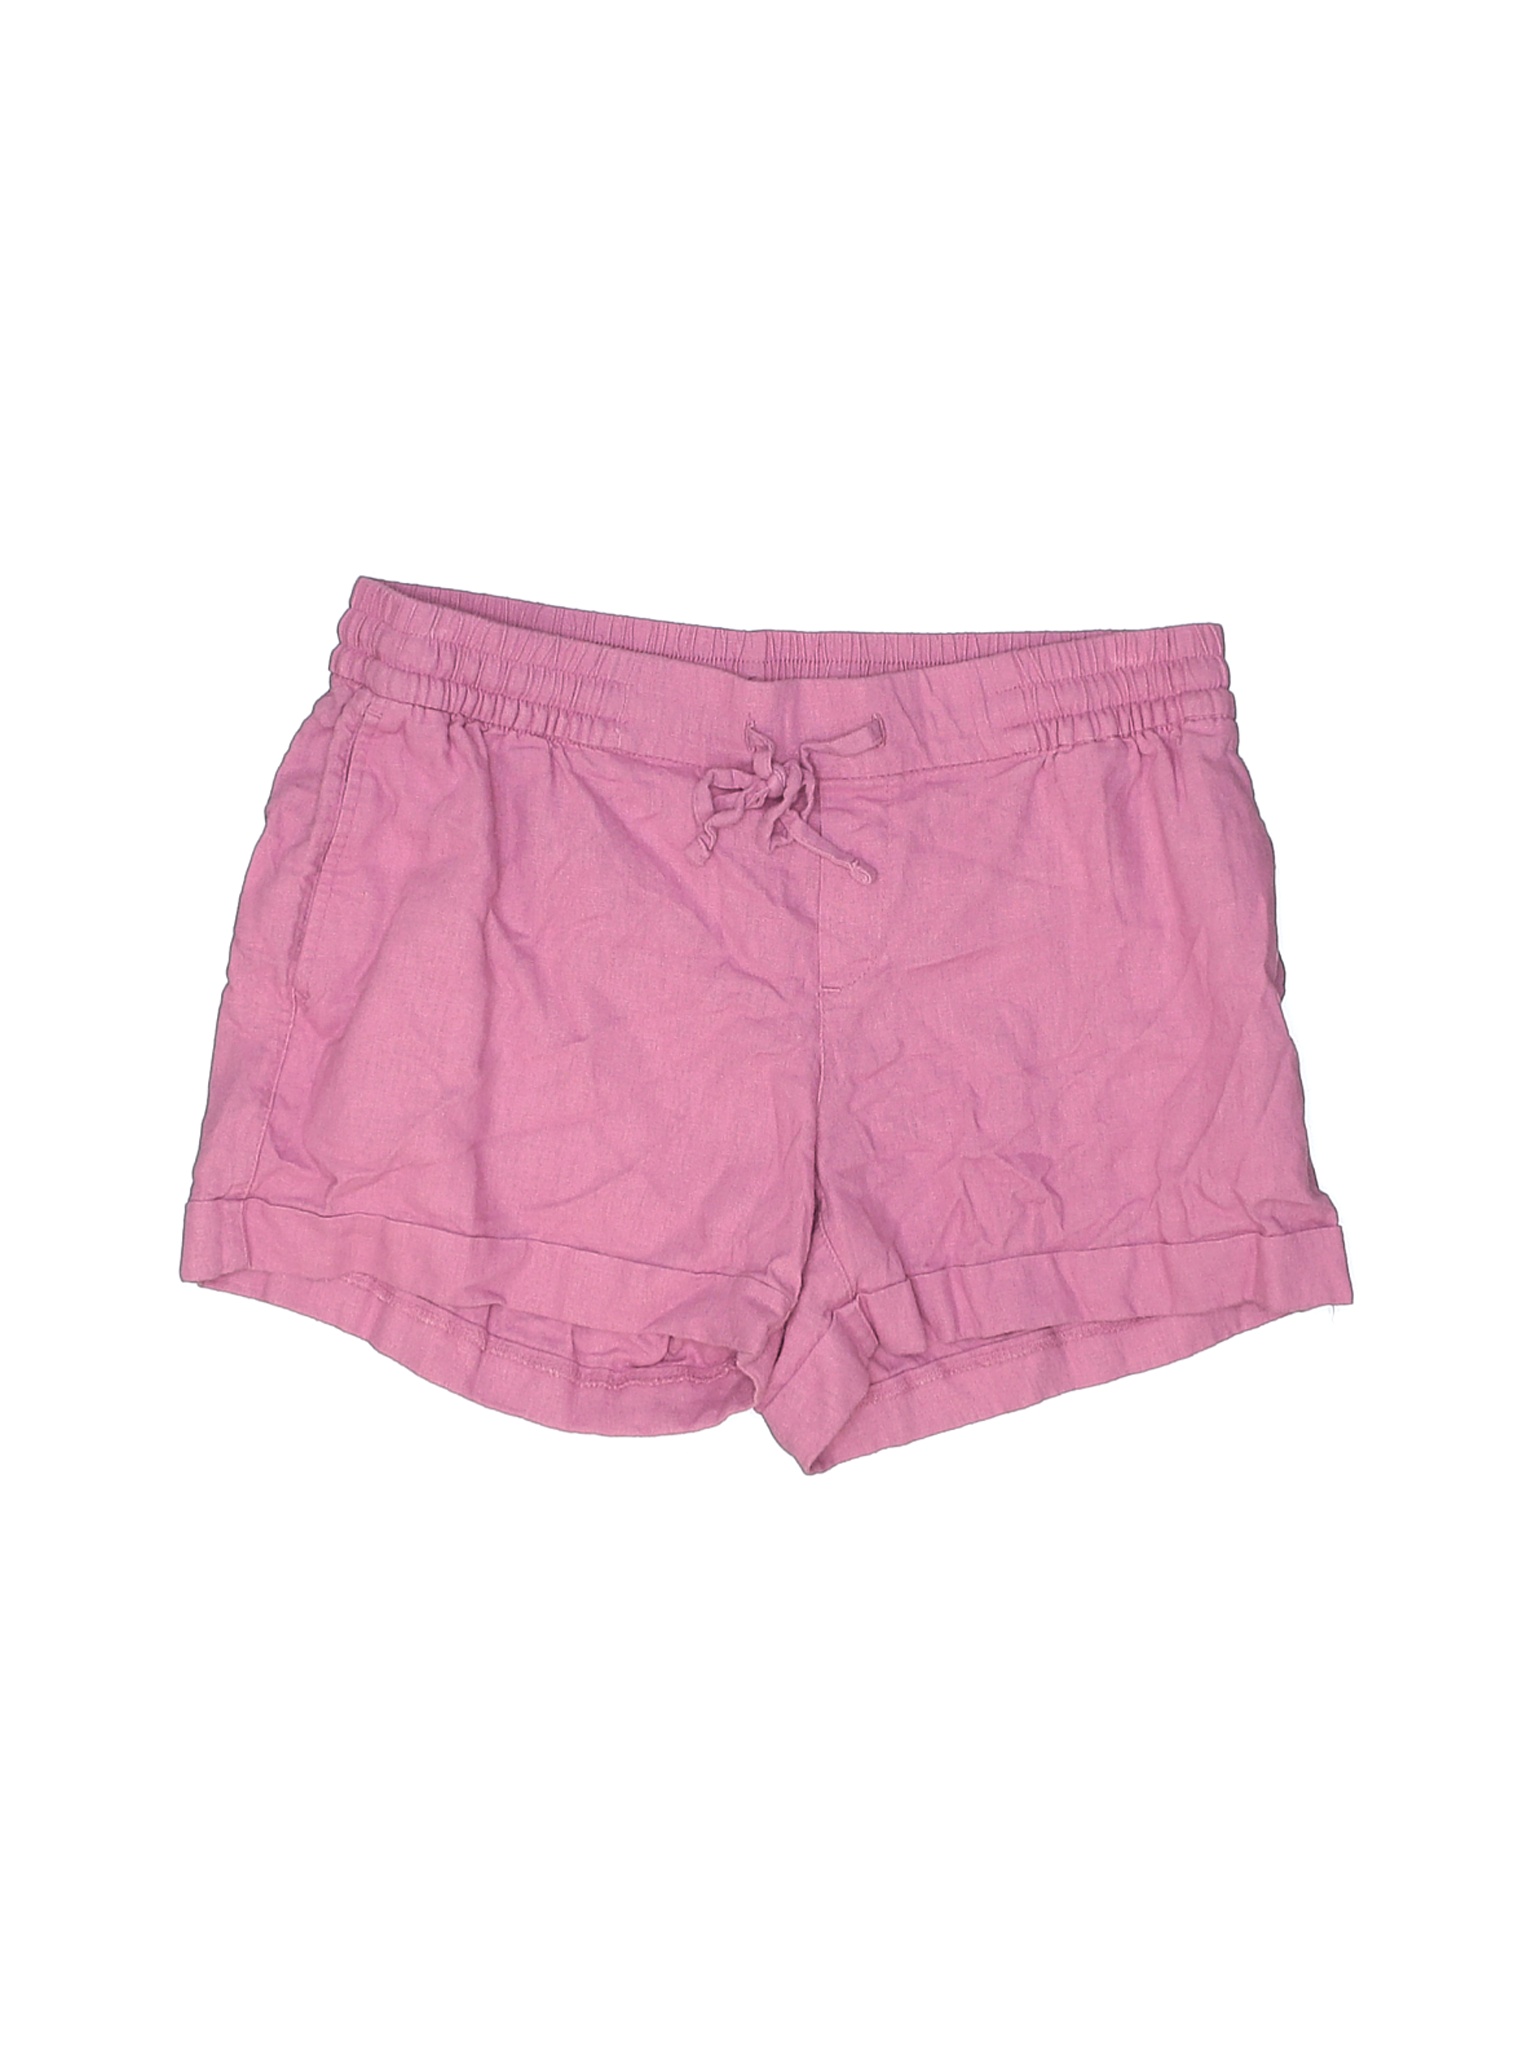 Old Navy Women Pink Shorts M | eBay